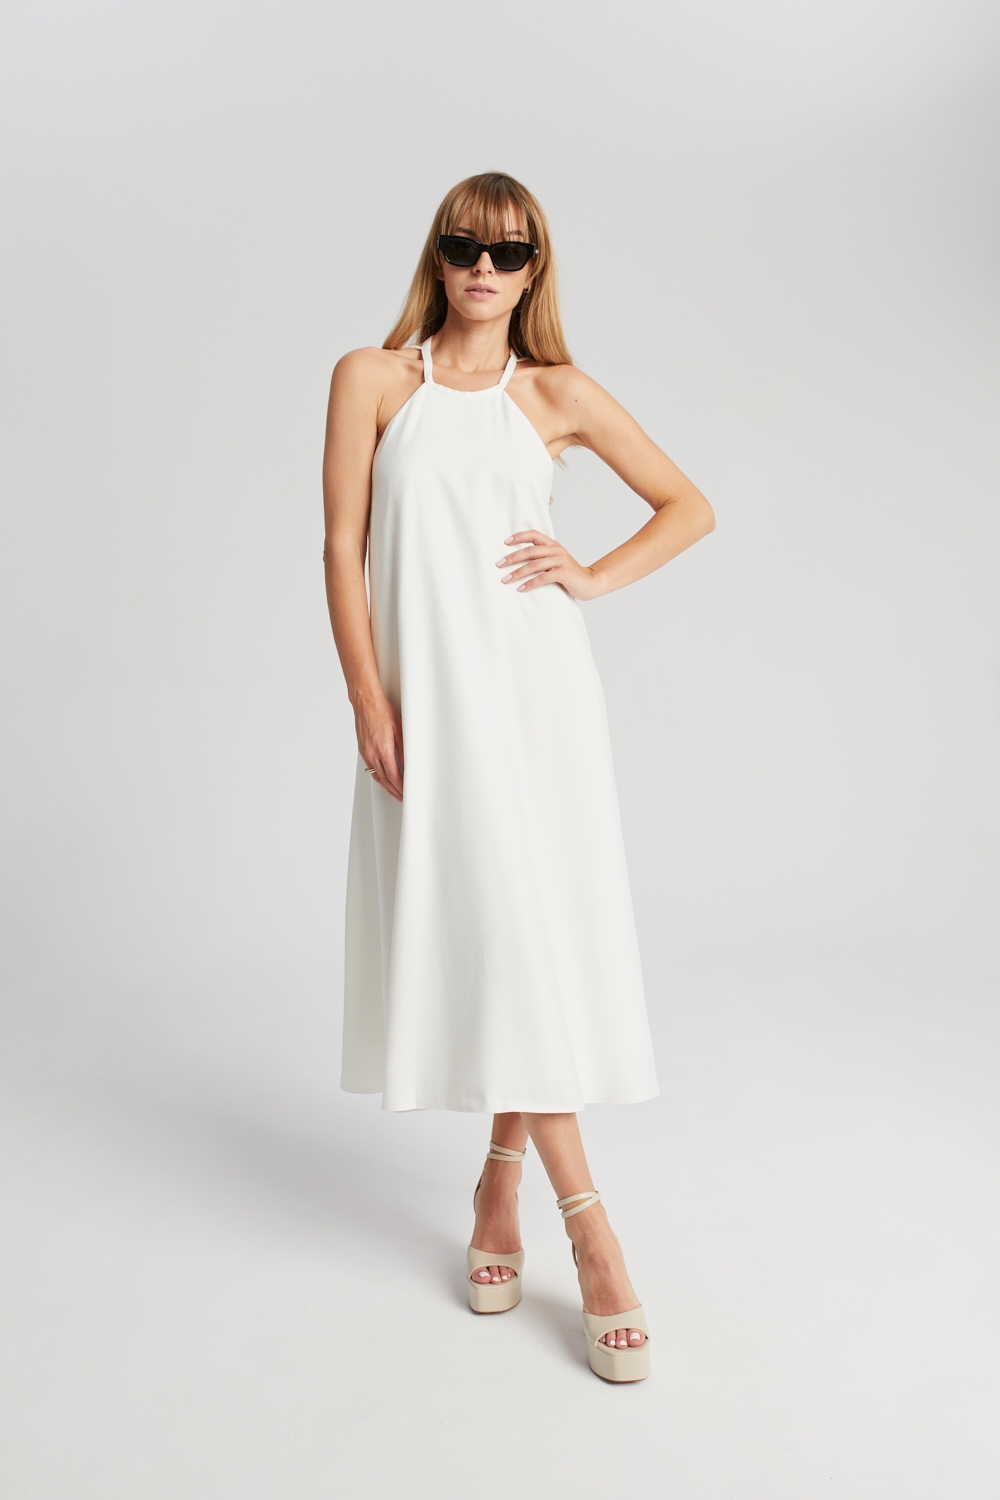 Biała sukienka Selena